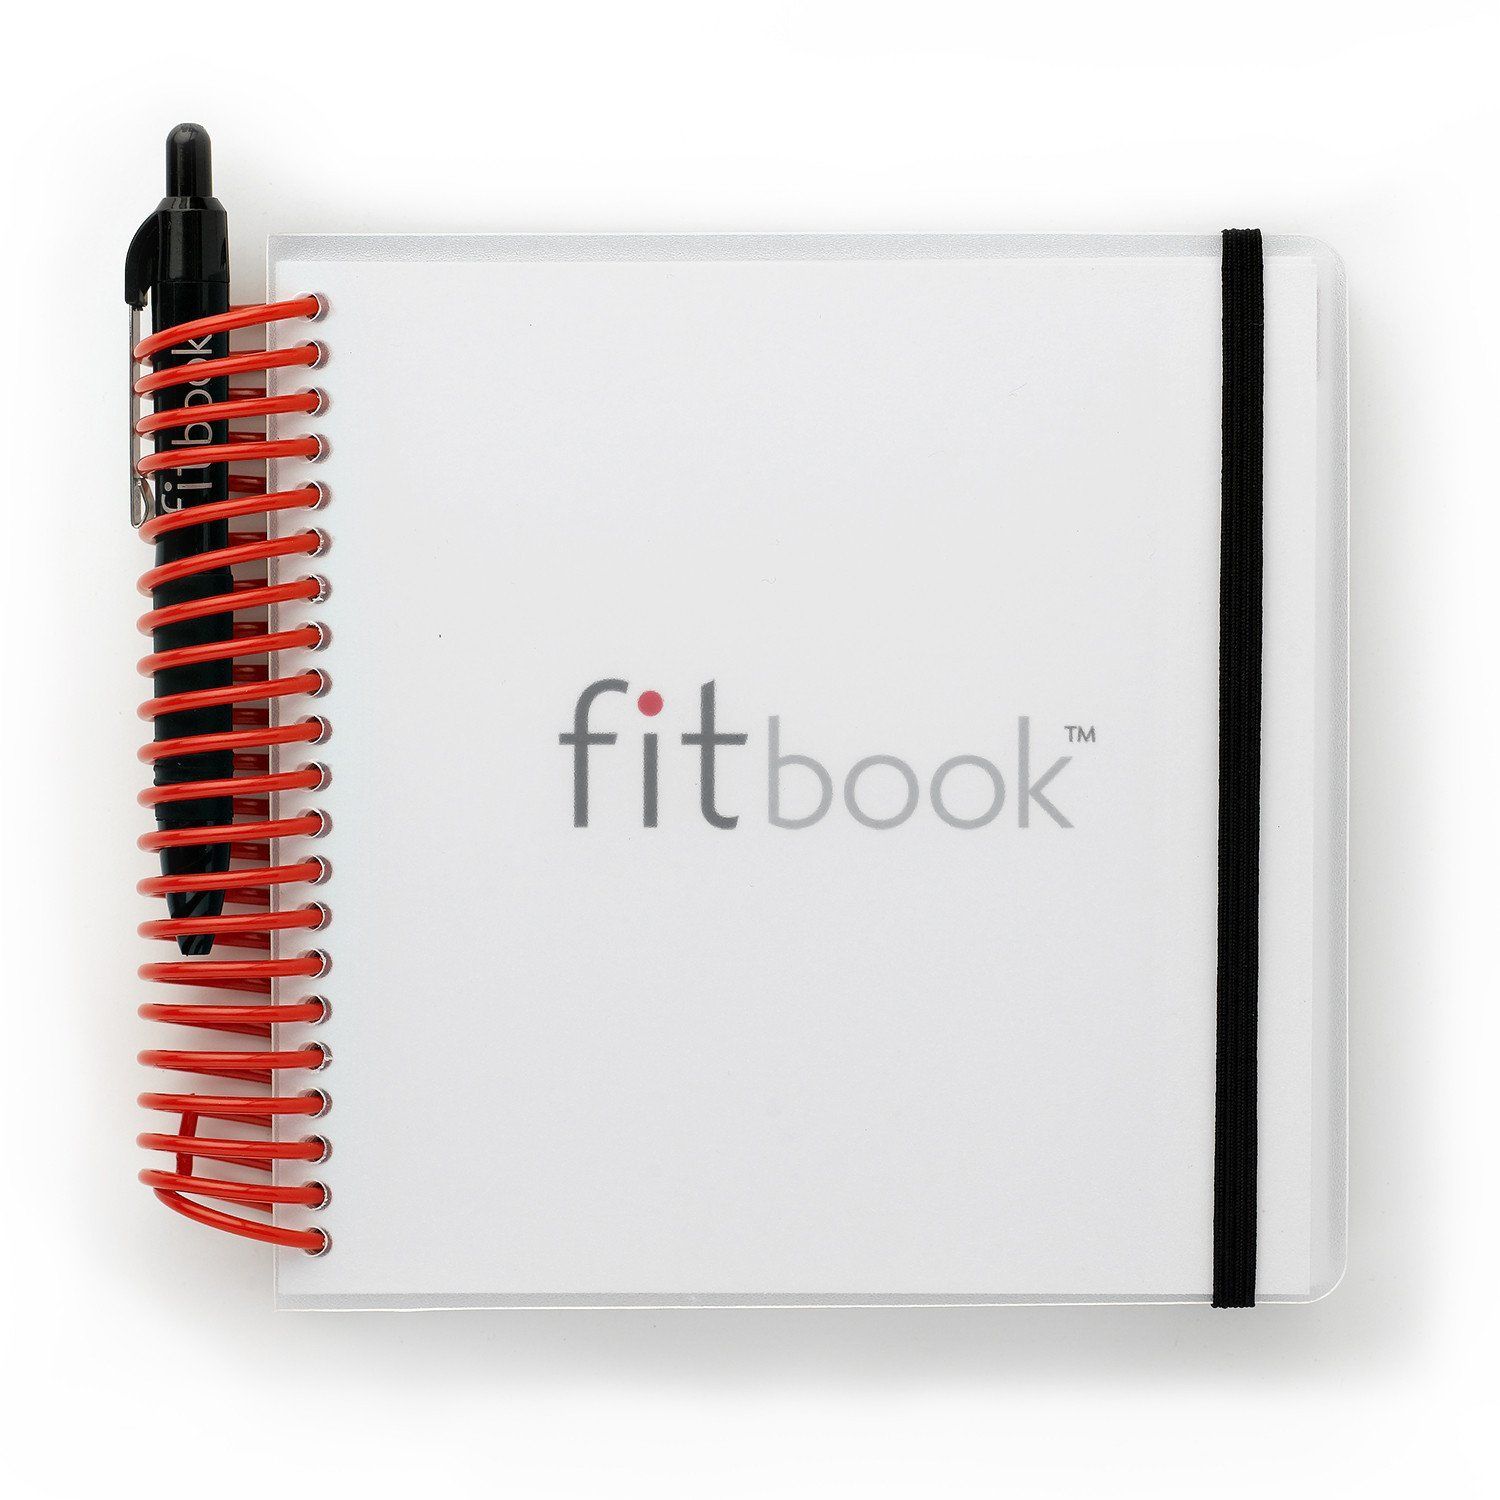 4. Fitbook – Fitlosophy